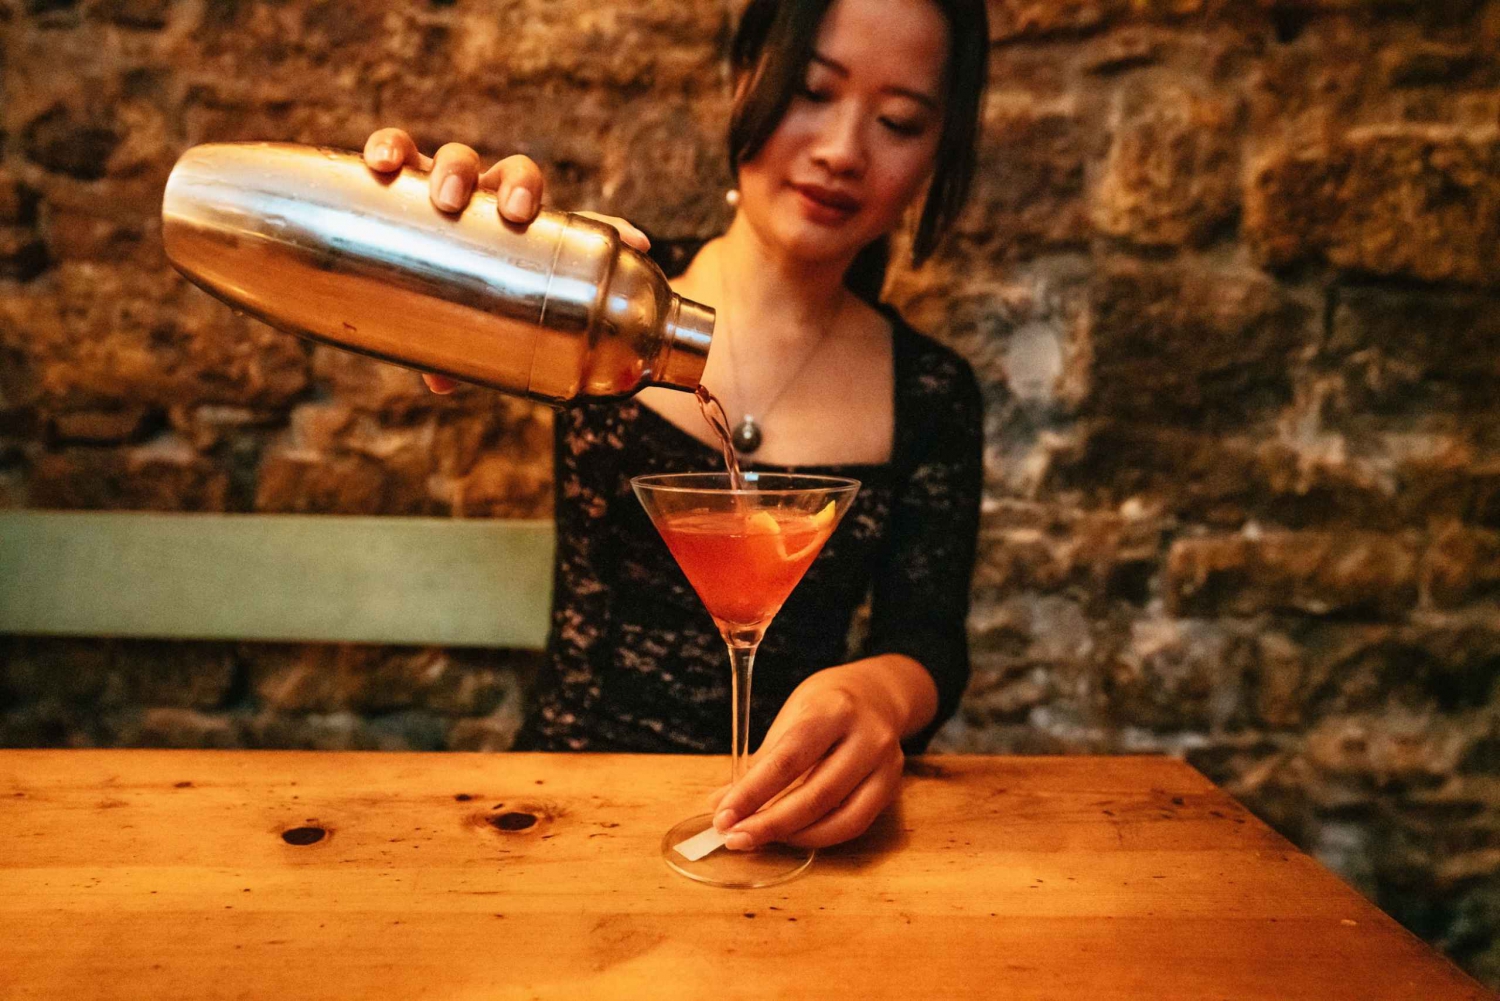 Barcelona: Cocktail Master Class av Mixologist med Tapas